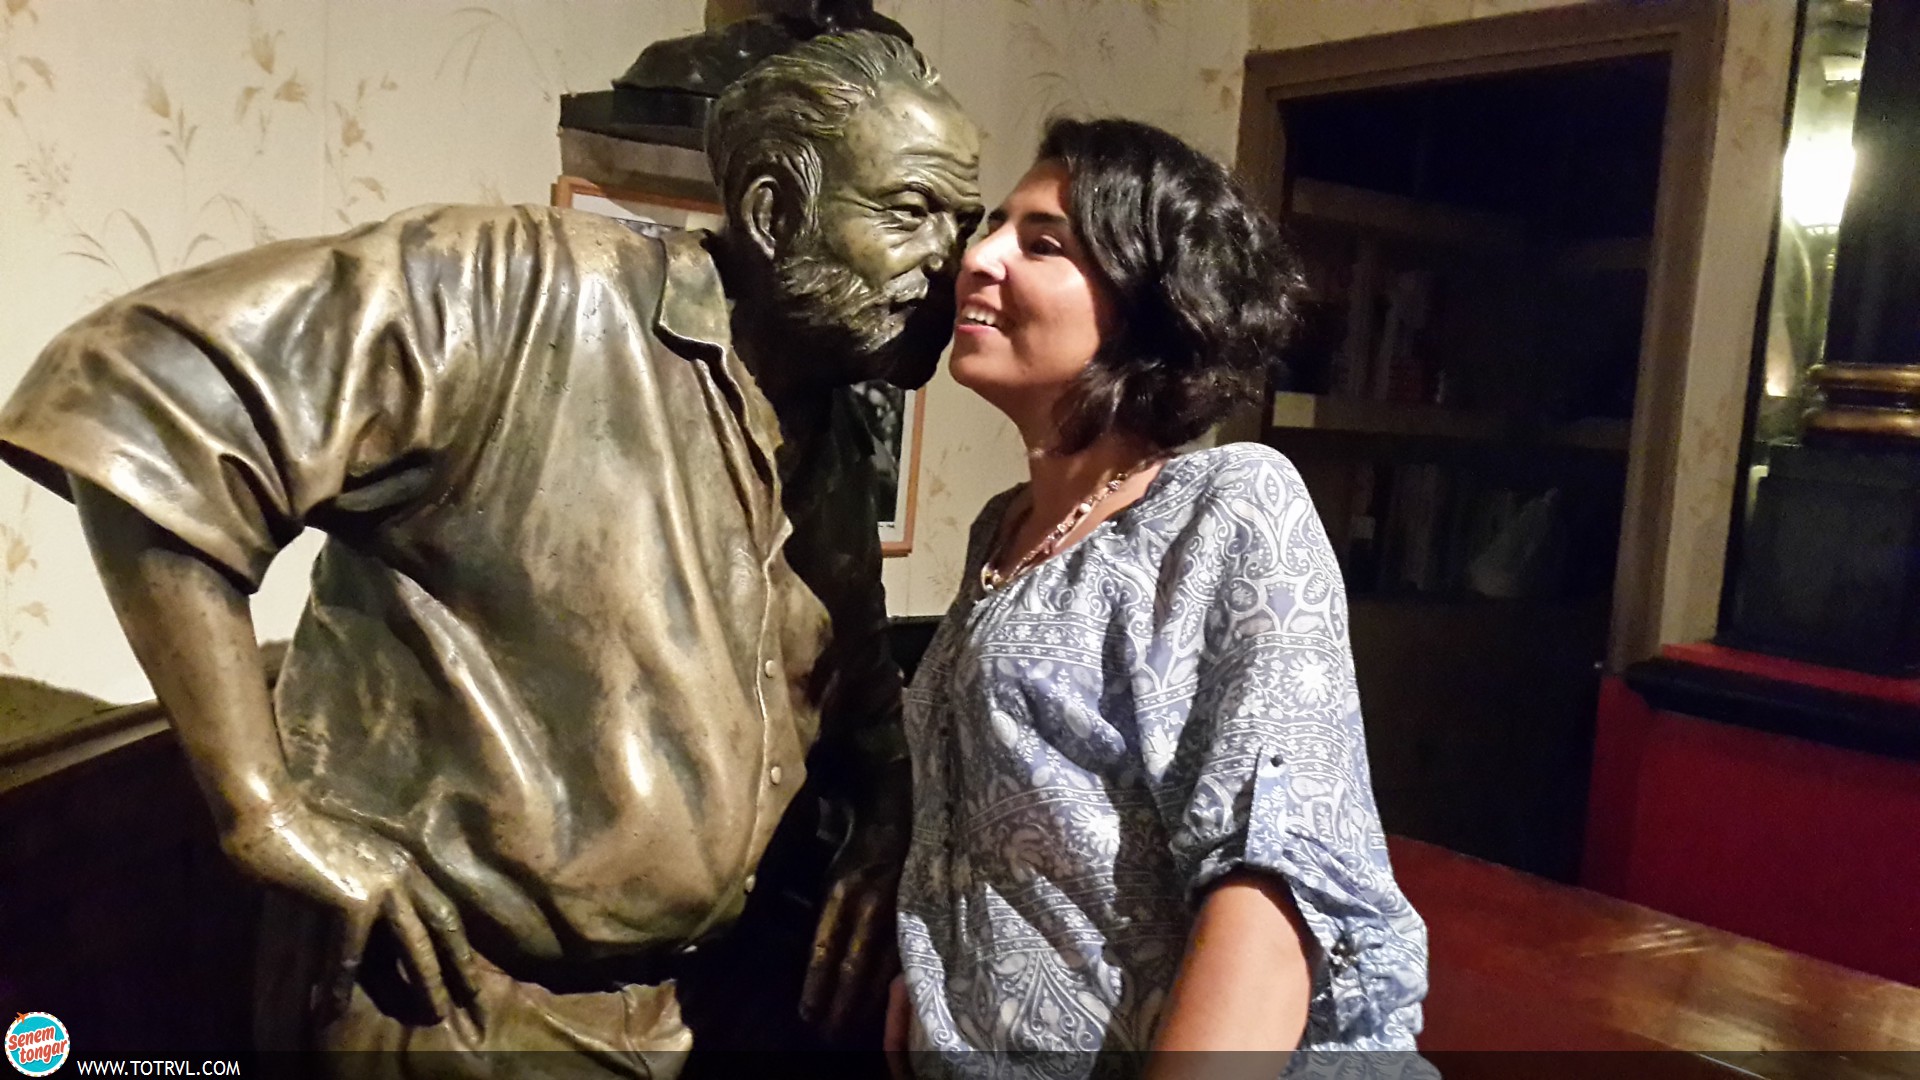 Ernest Hemingway and I